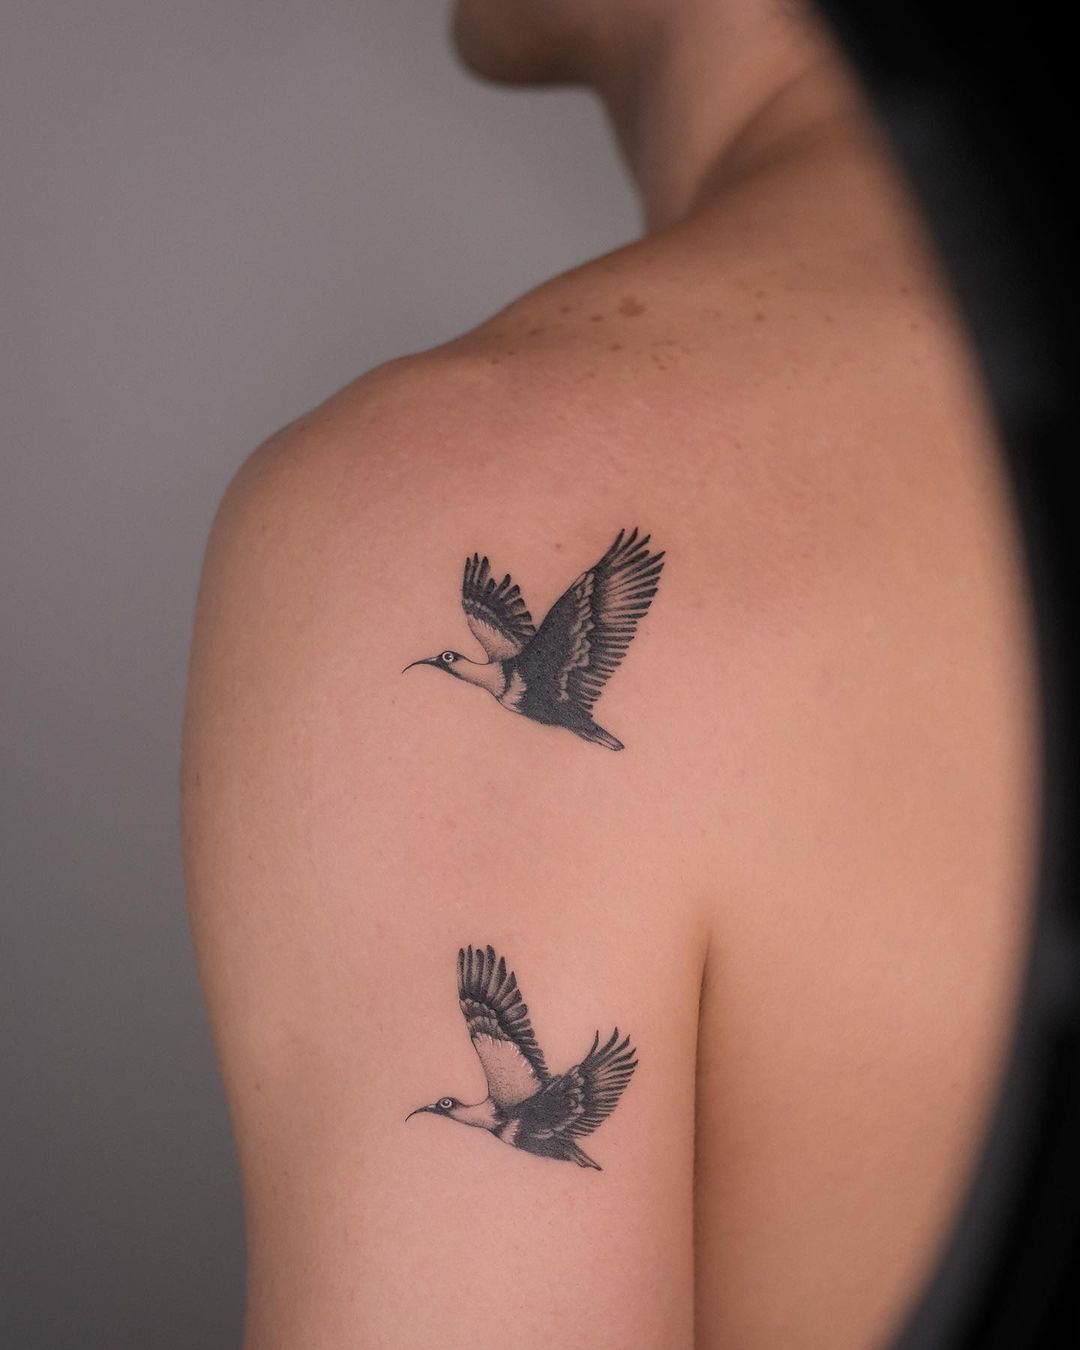 Birds tattoo for women by kaplan.tattooing